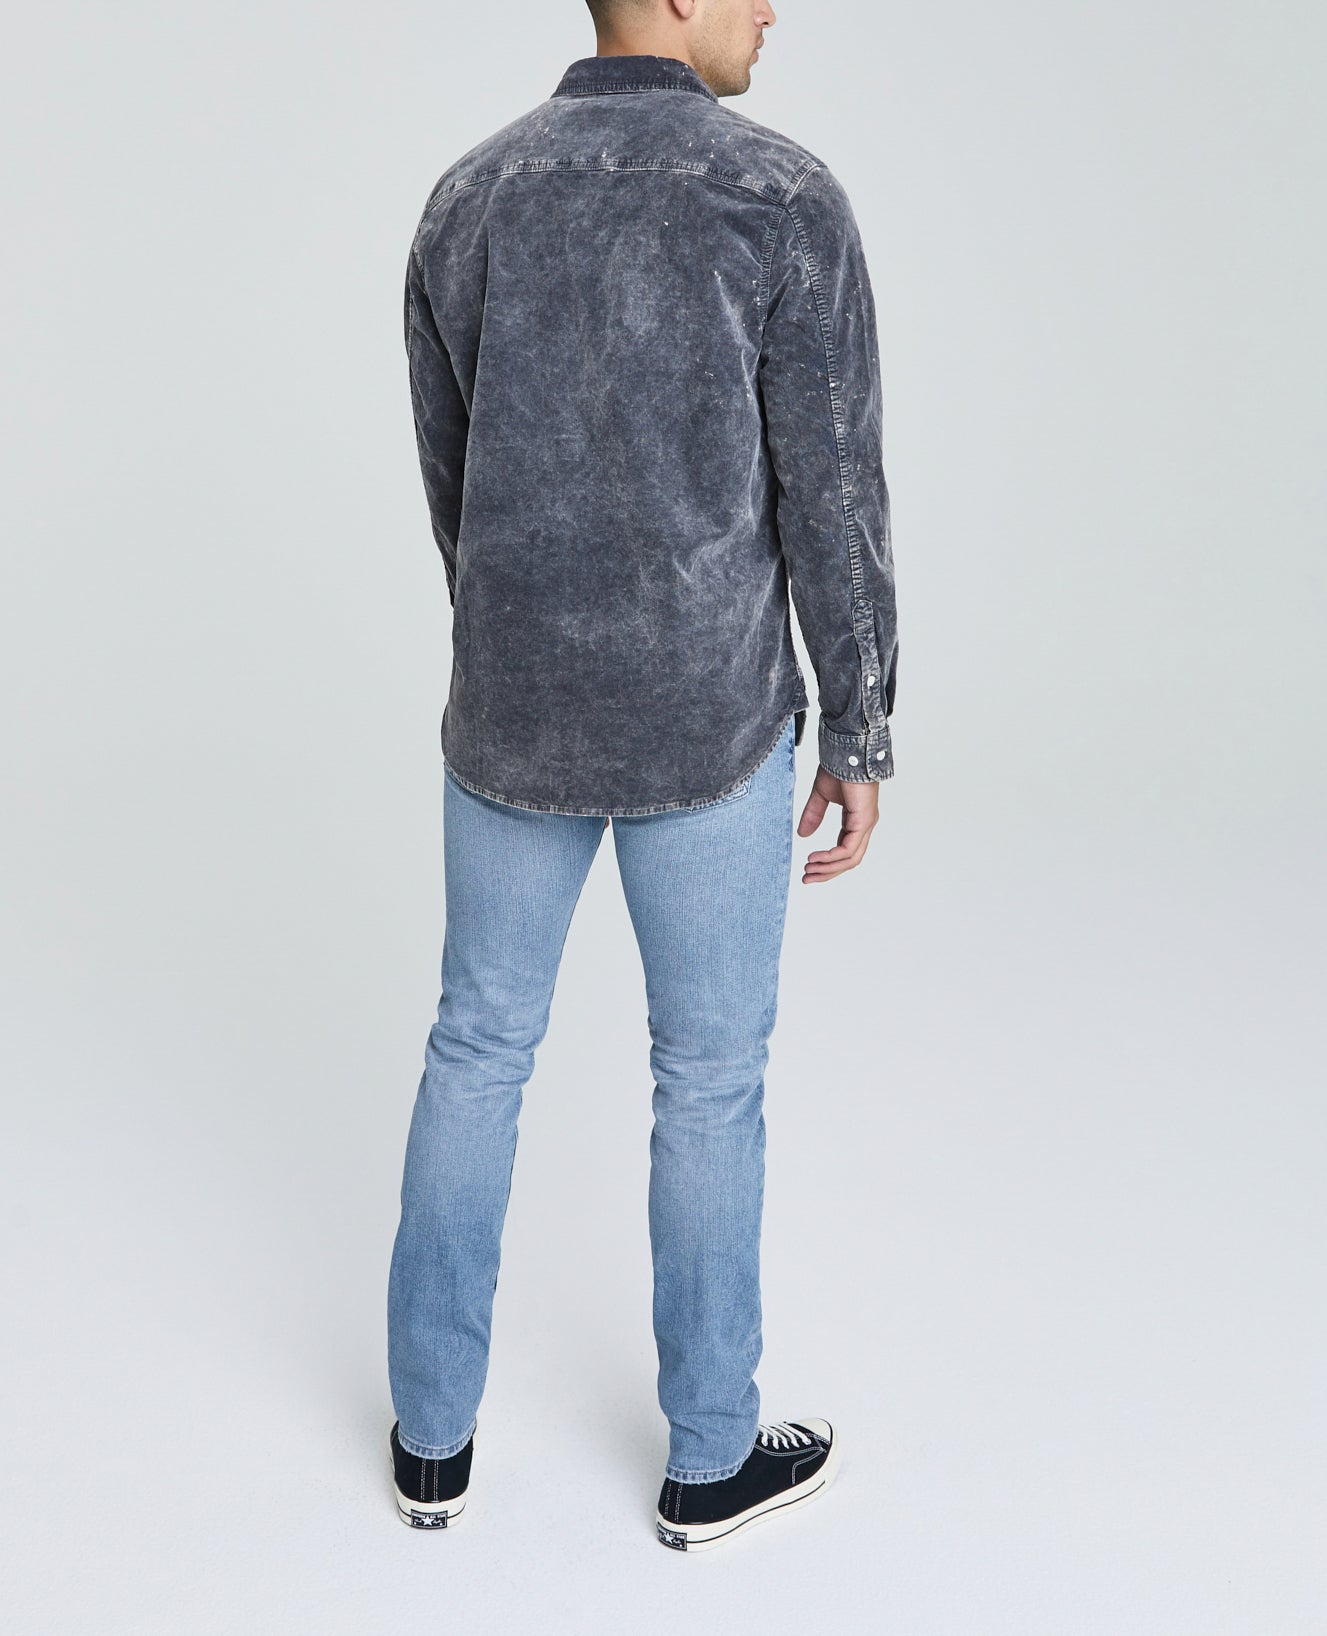 Benning Utility Shirt Atomized Charcoal Velvet Corduroy Men Tops Photo 6